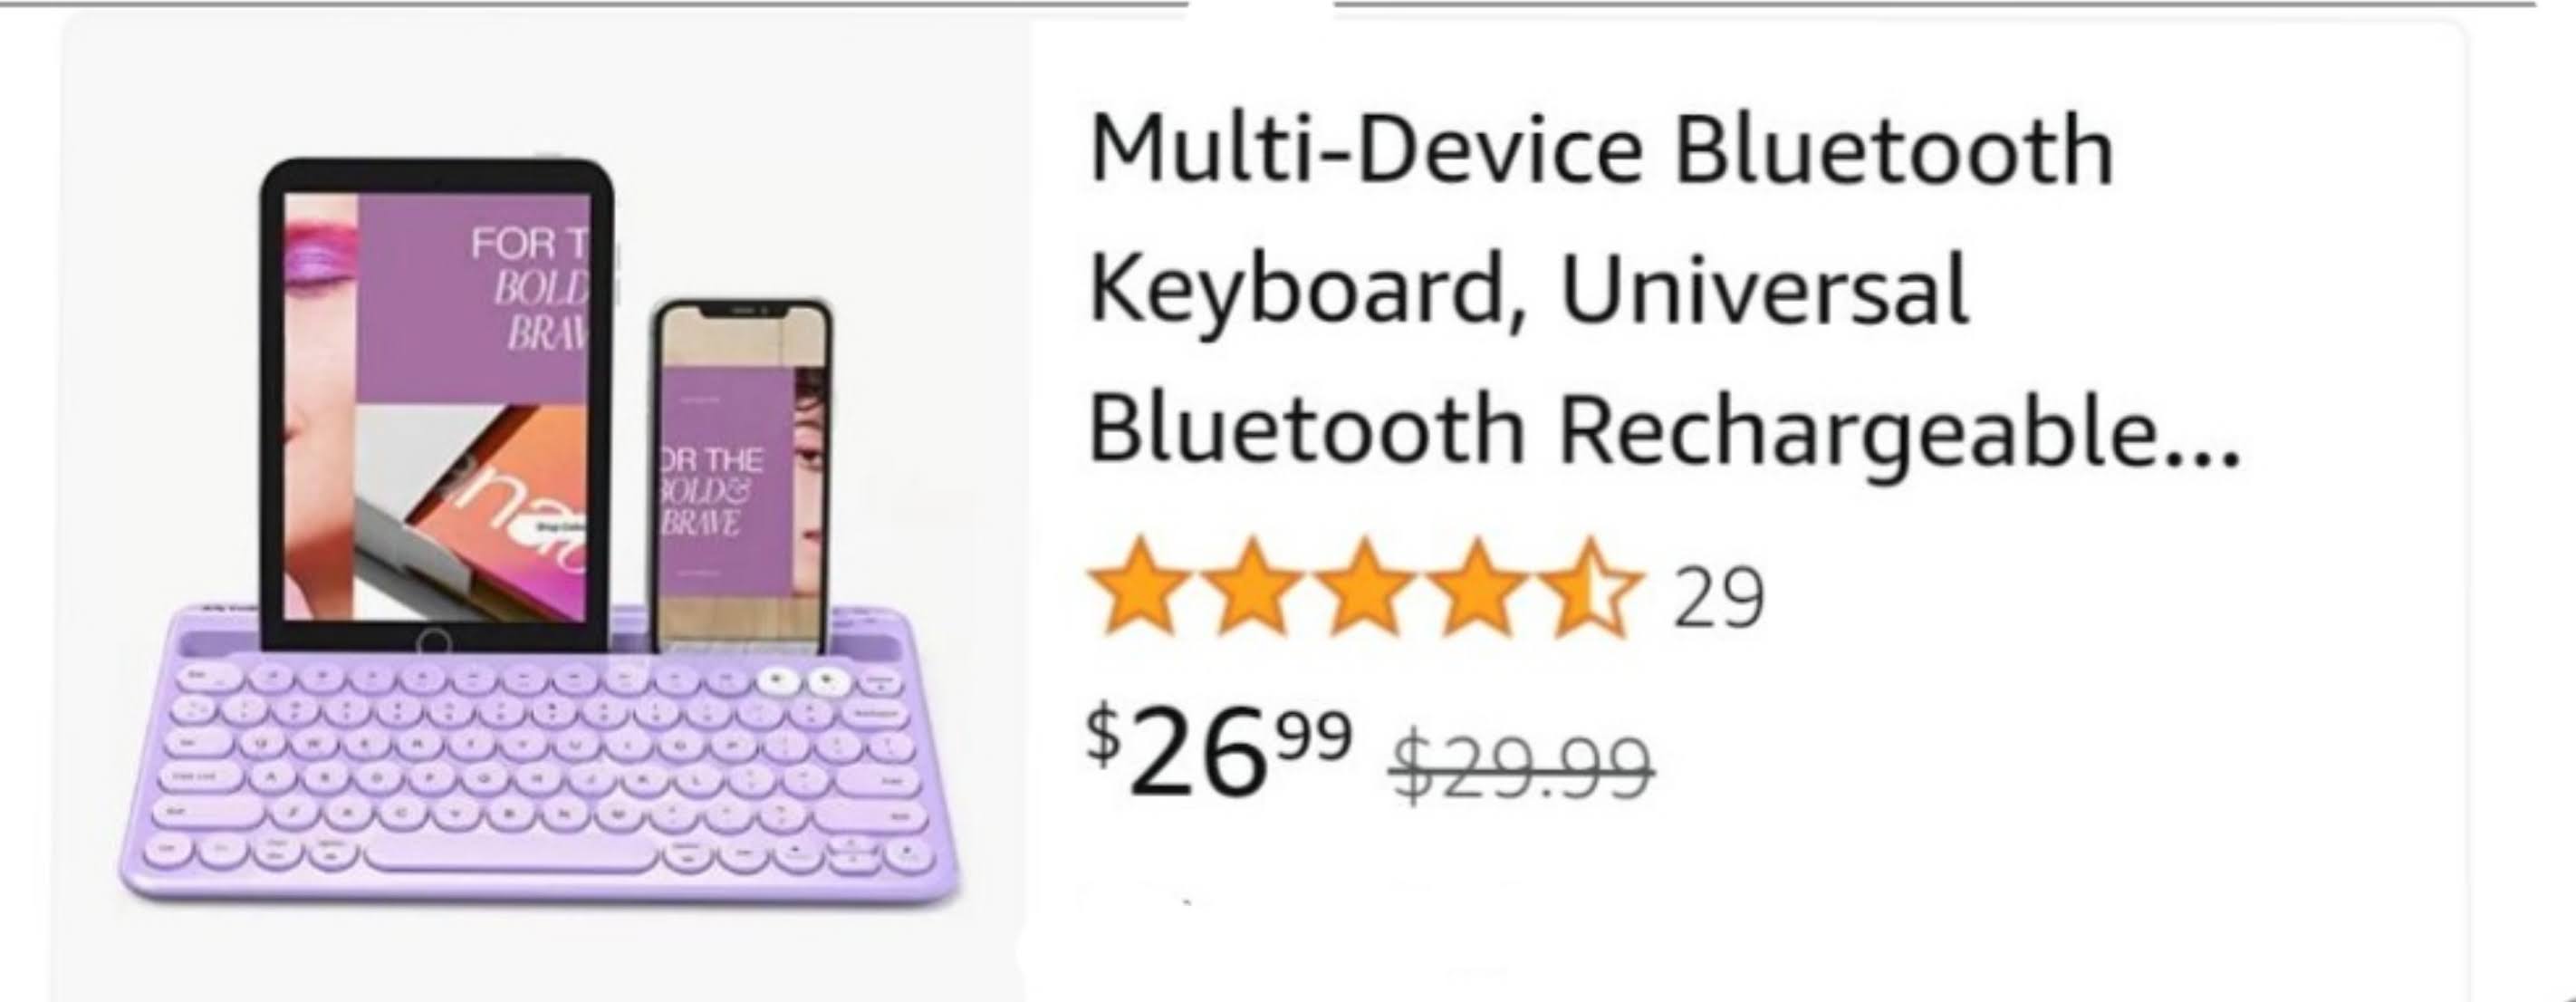 best bluetooth keyboard for iPad 7th generation